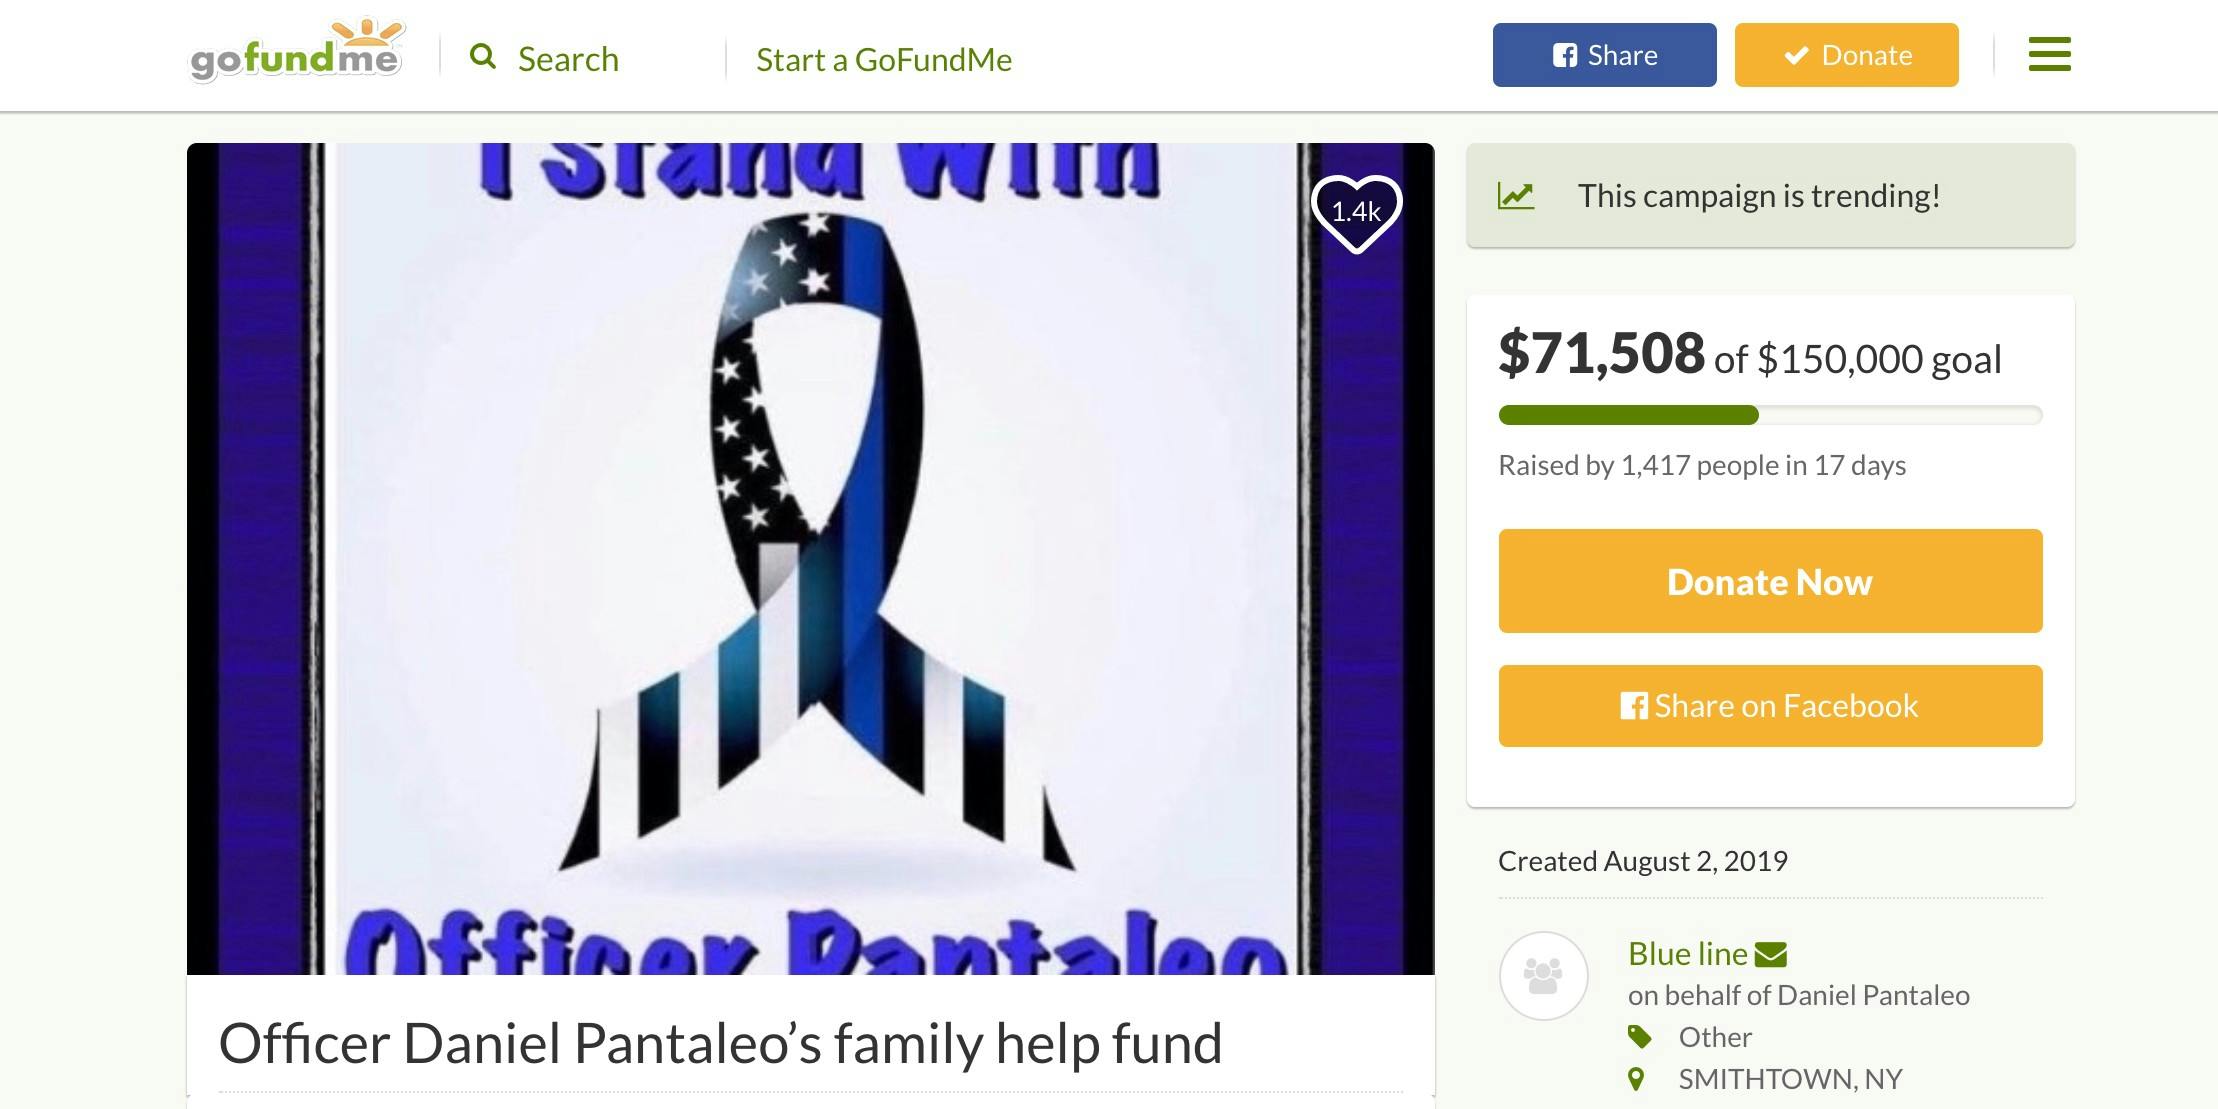 The GoFundMe page for Daniel Pantaleo shows $71,500 raised